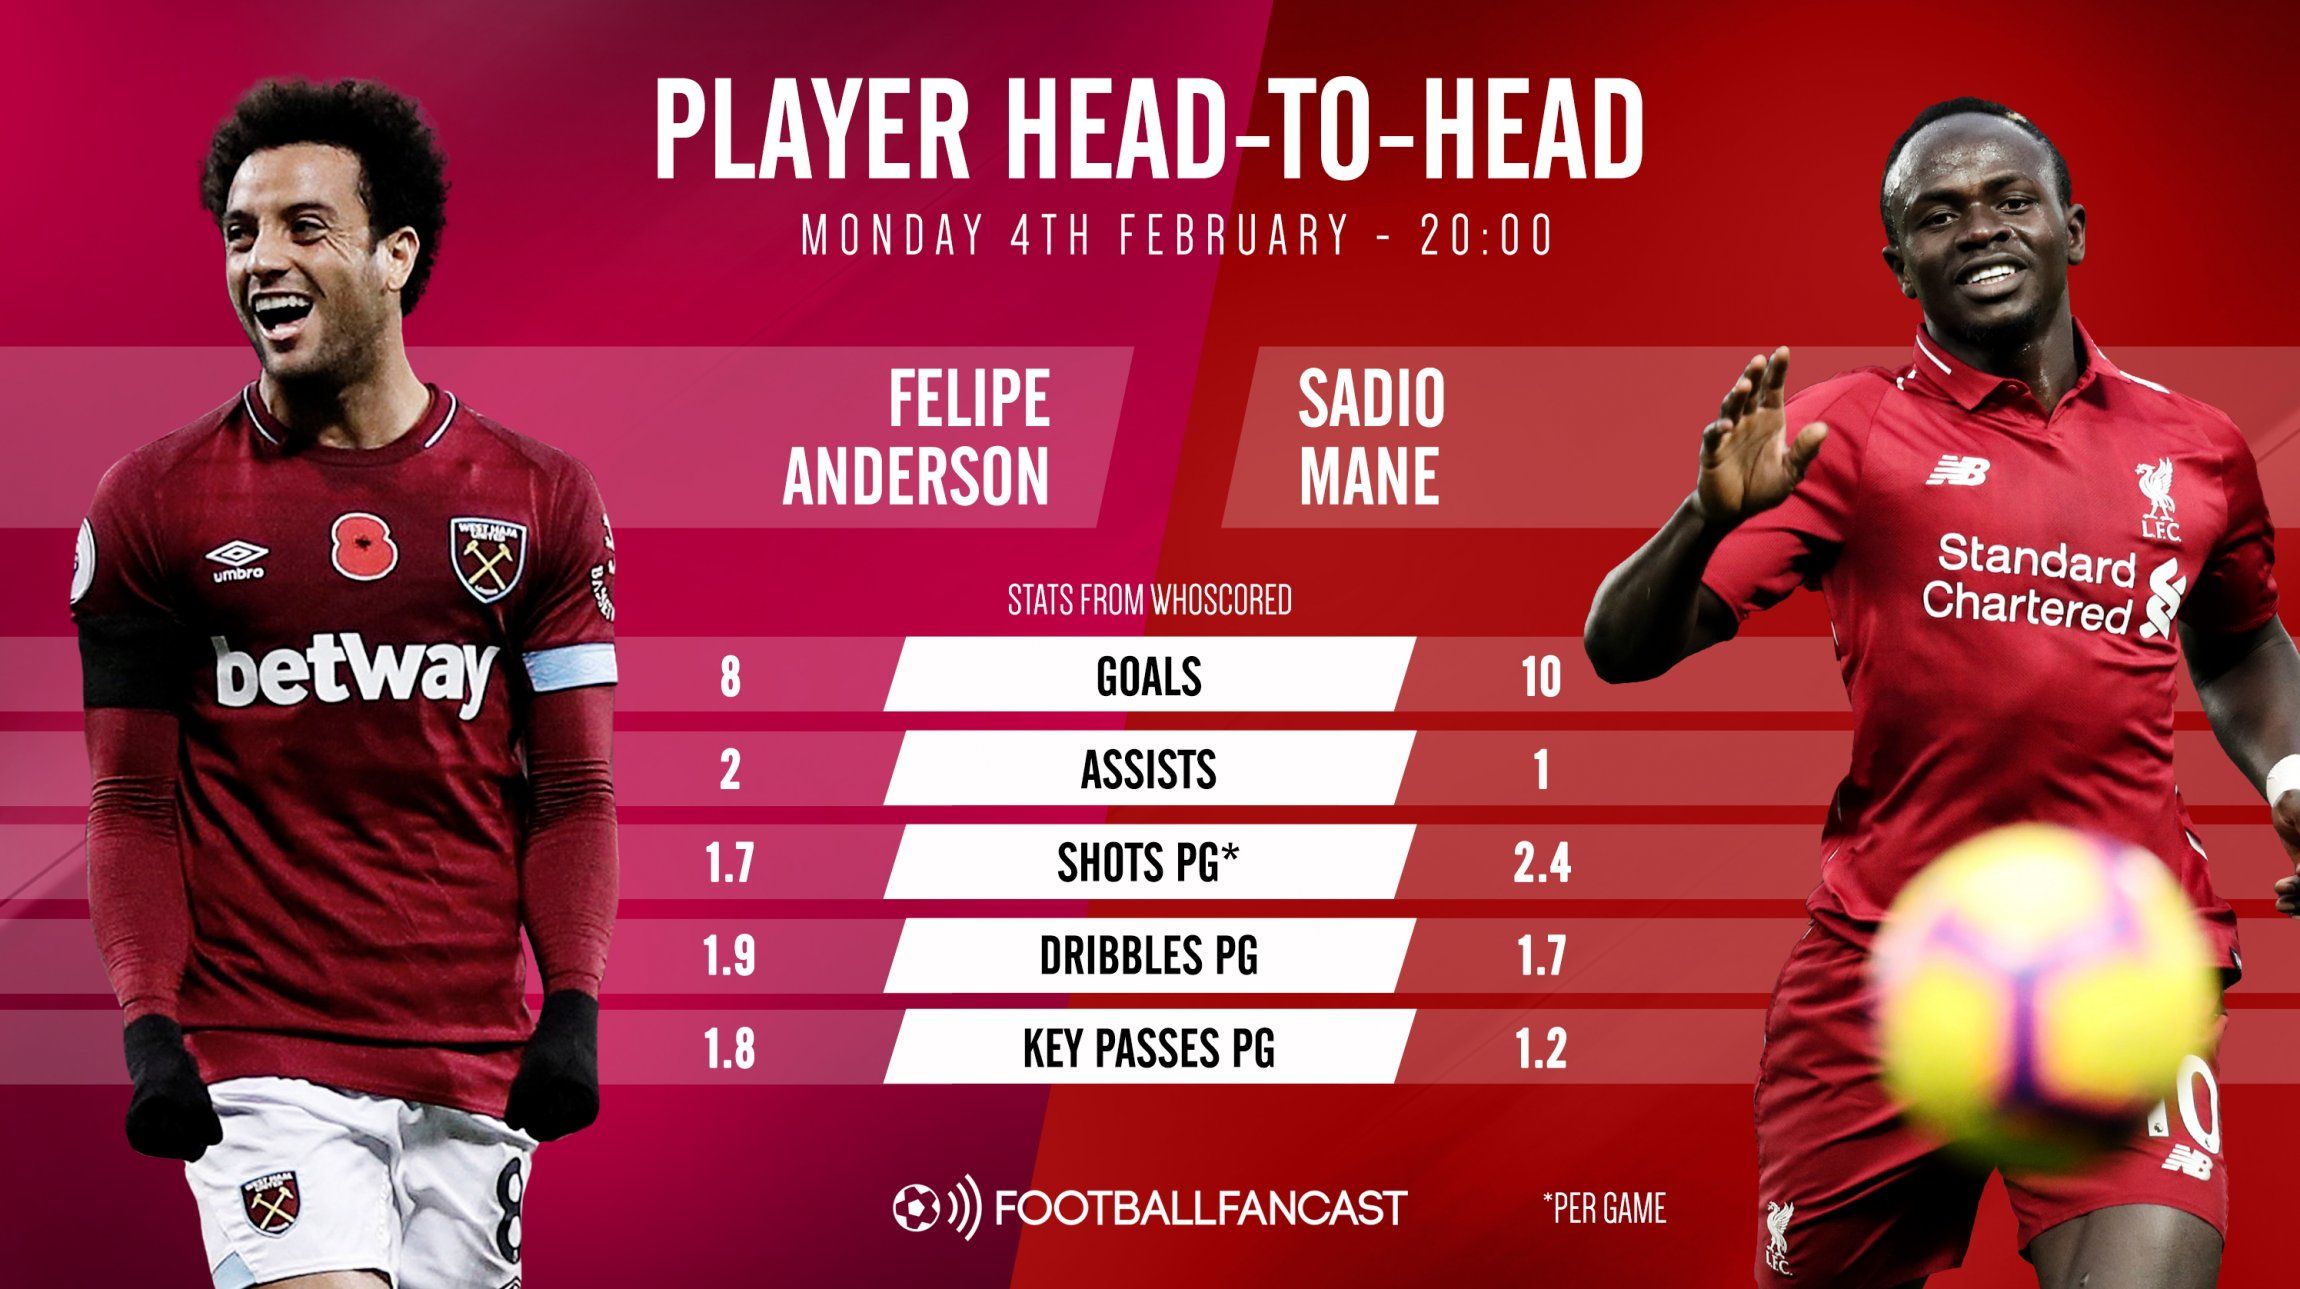 Felipe Anderson vs Sadio Mane - Head to Head